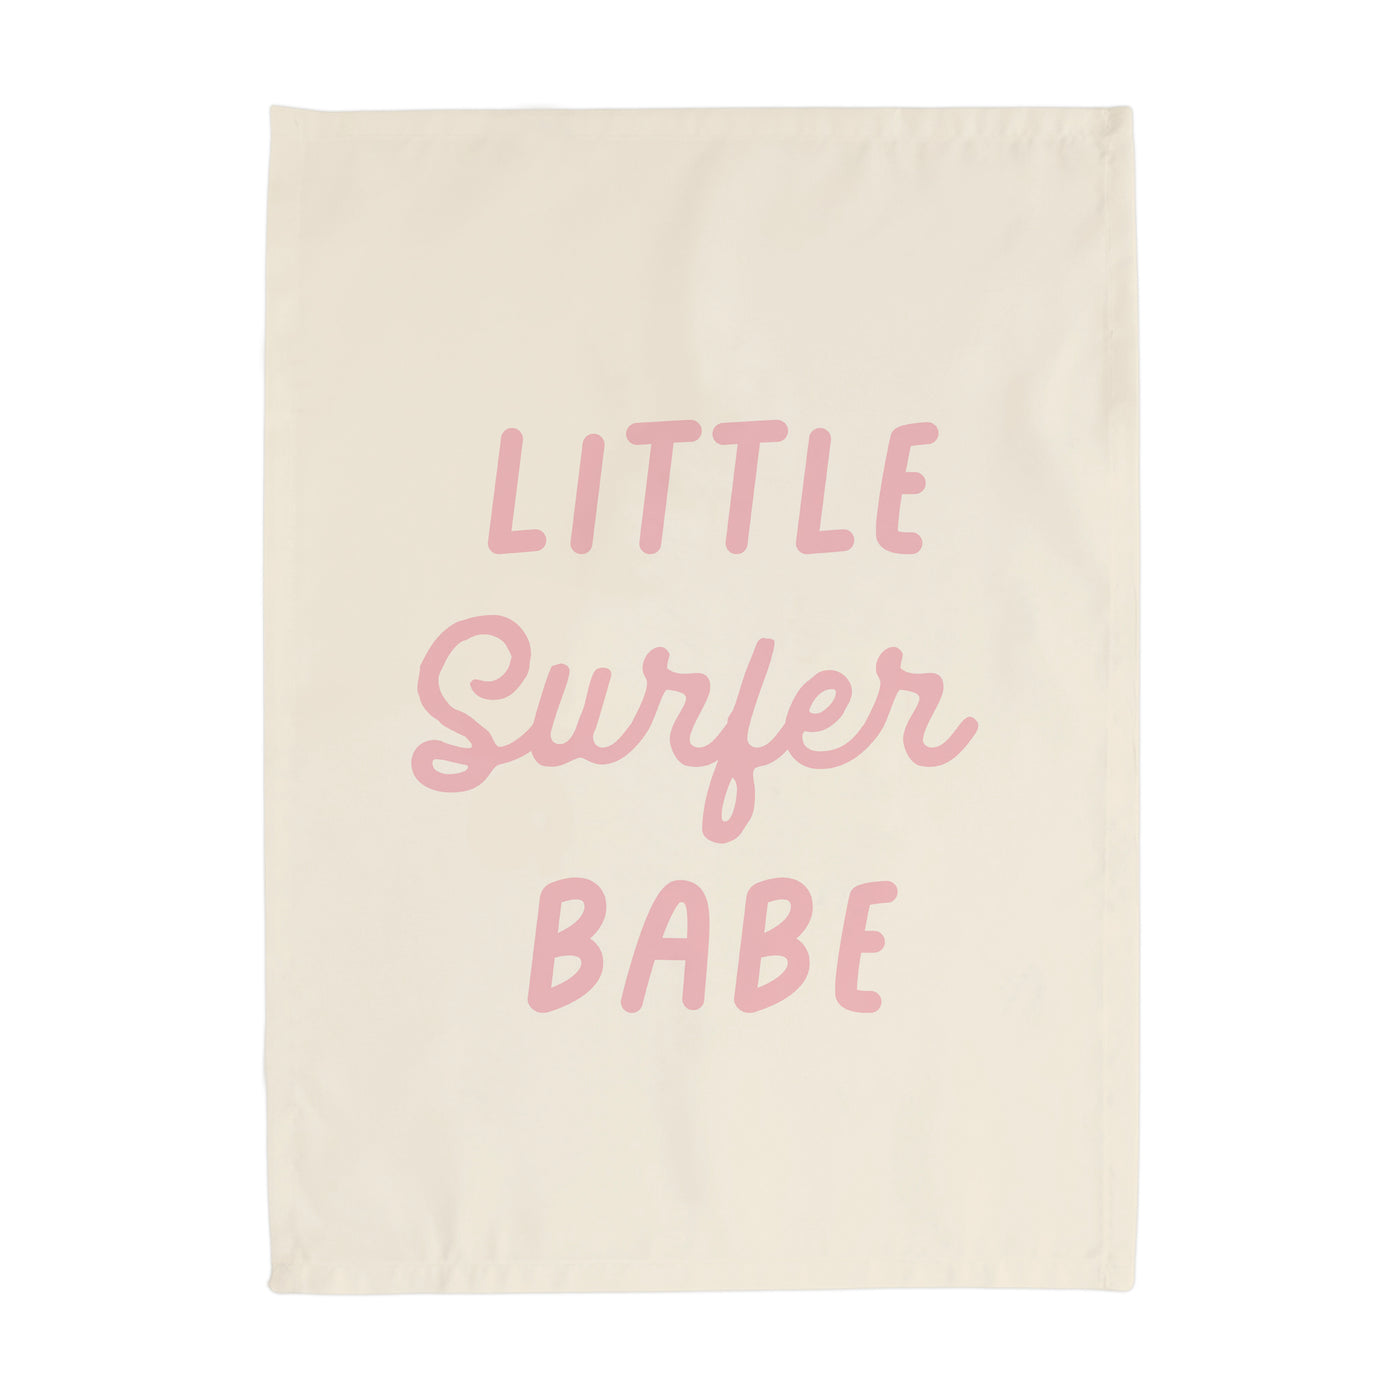 Little Surfer Babe Banner